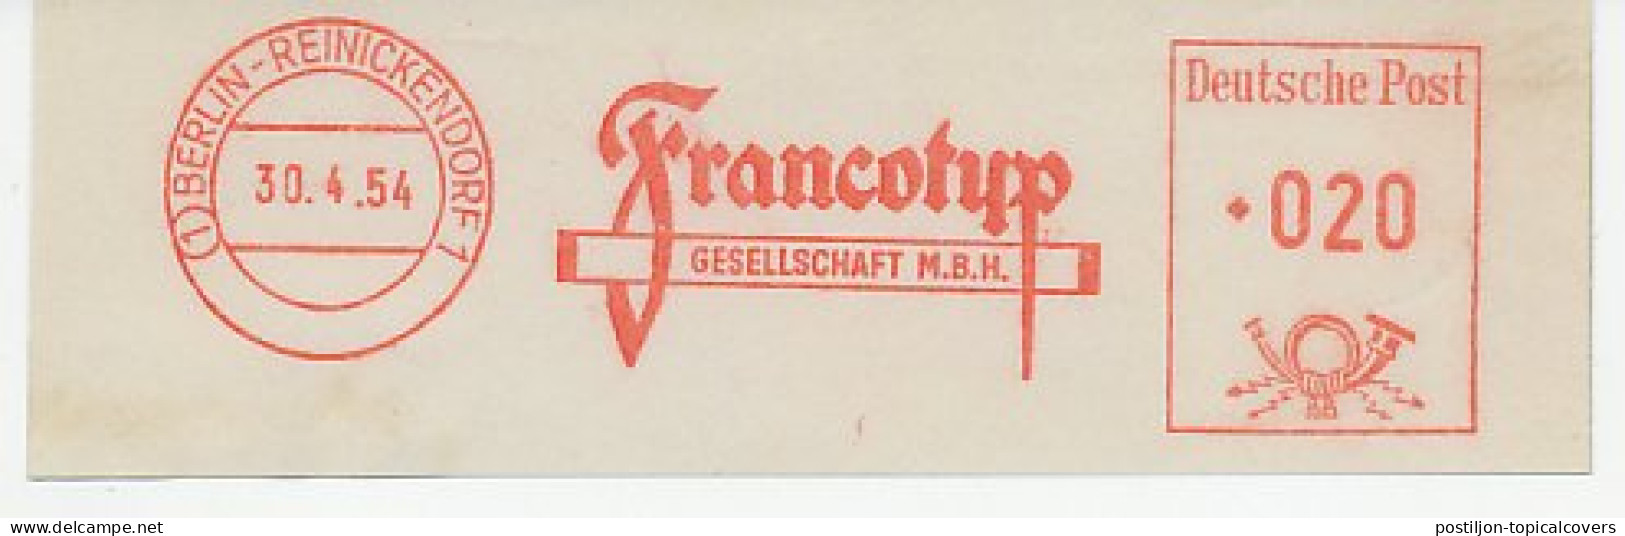 Meter Cut Germany 1954 Francotyp - Machine Labels [ATM]